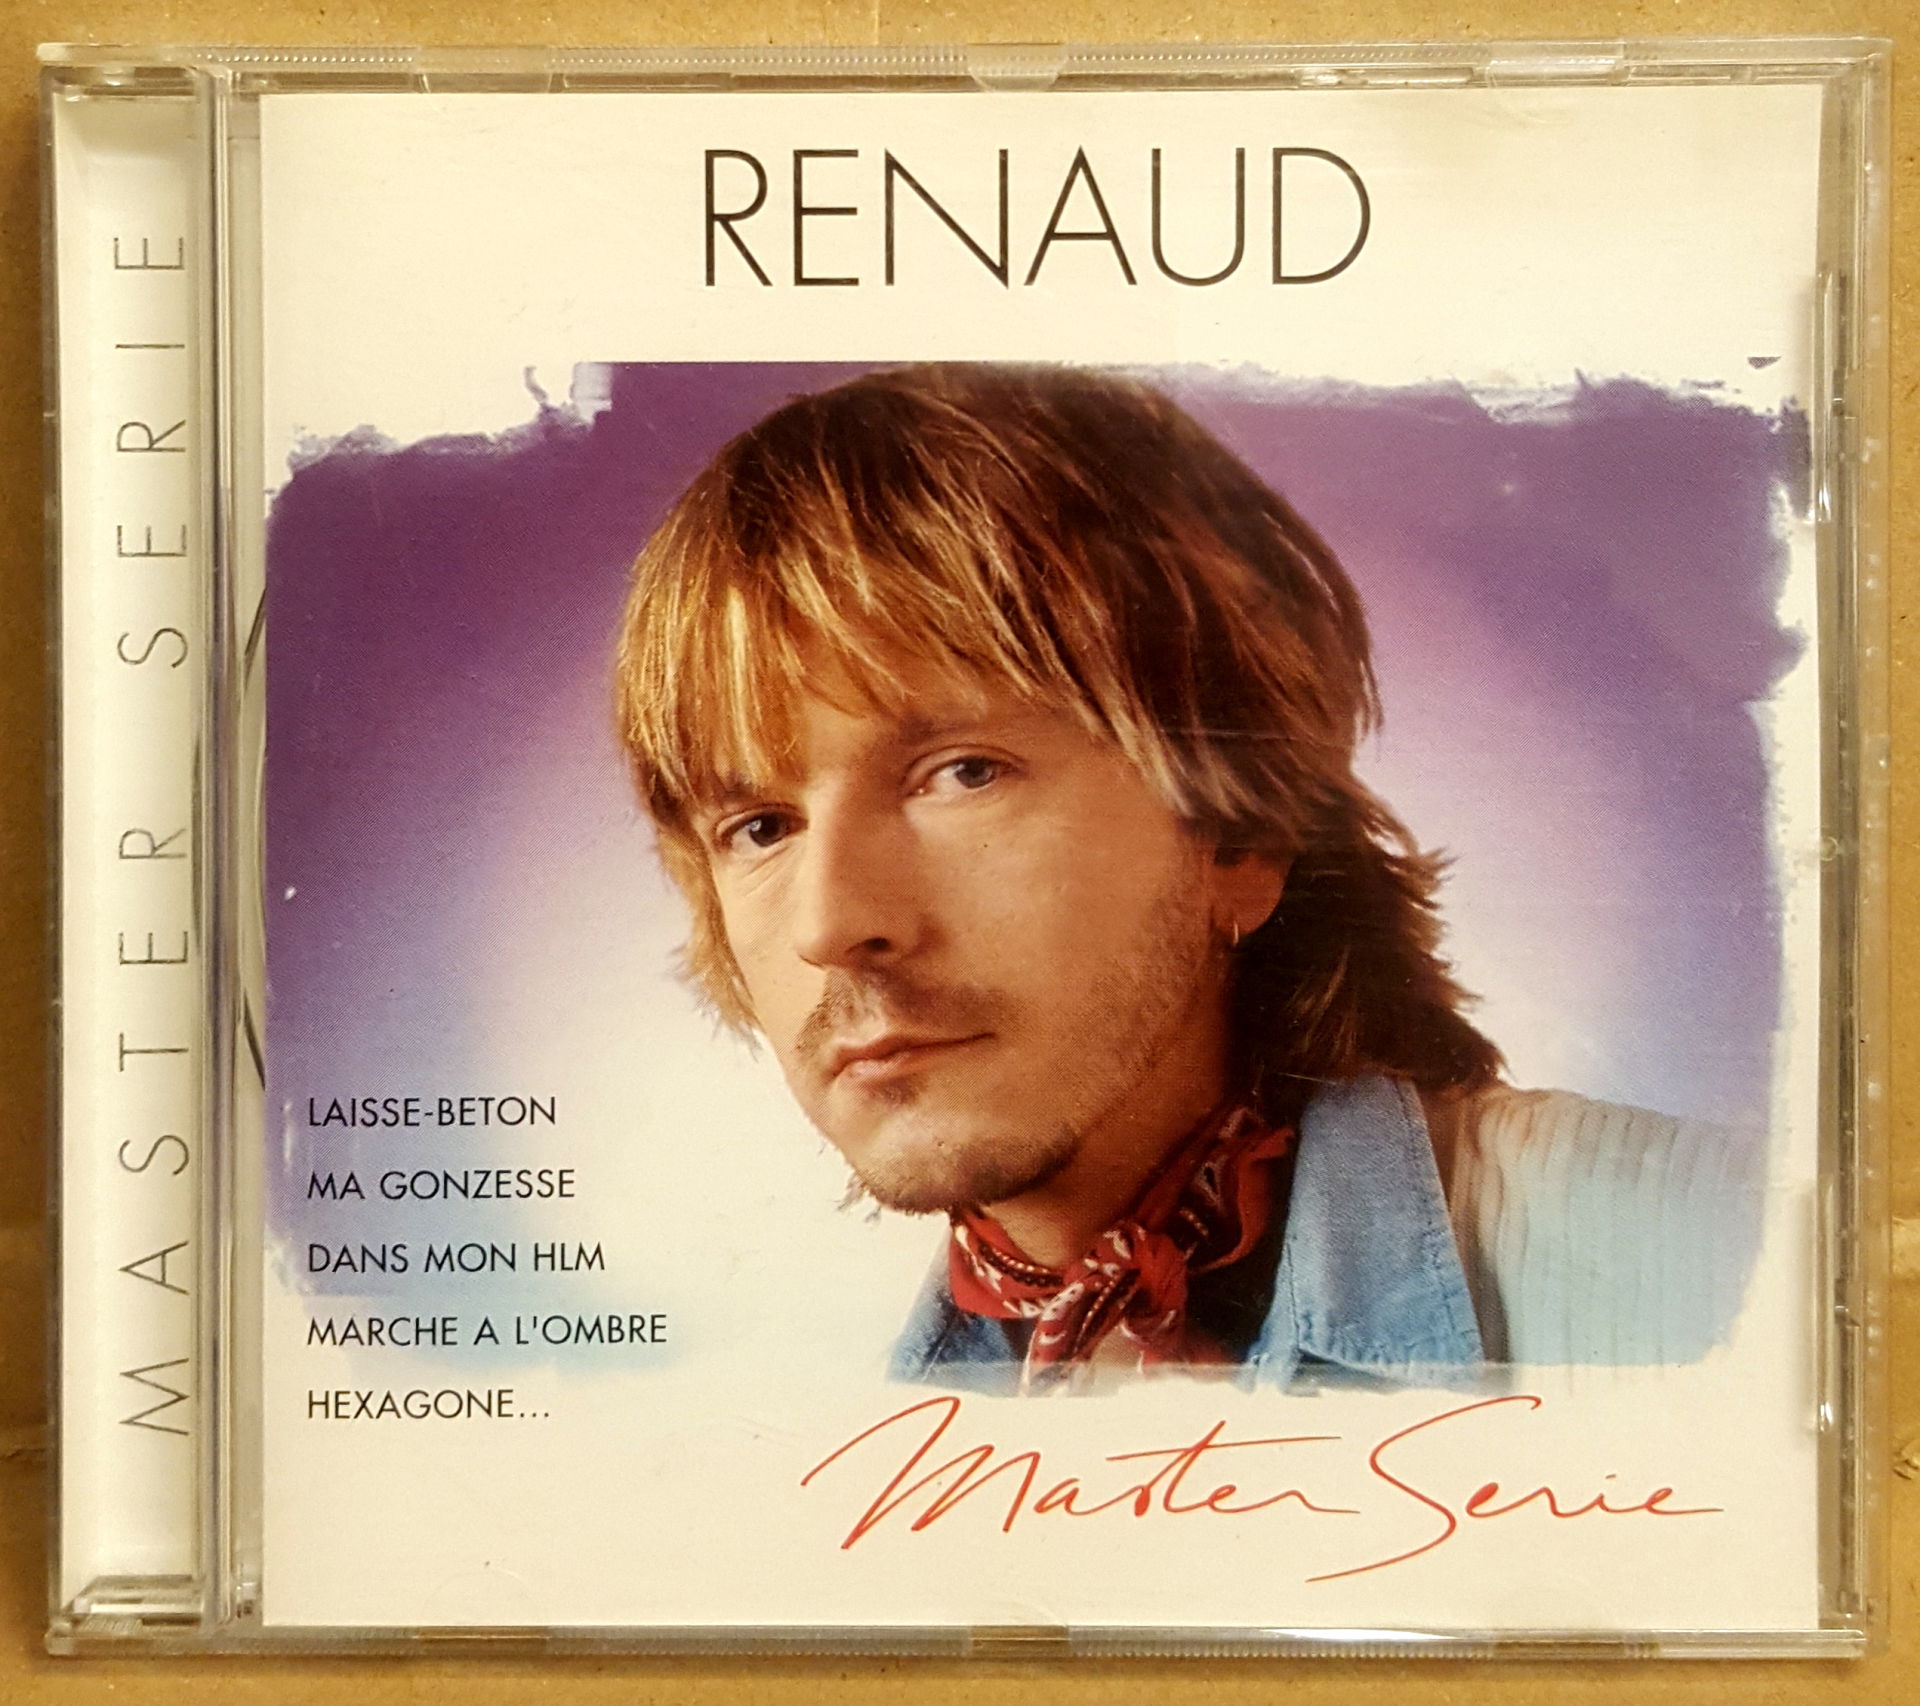 RENAUD - RENAUD / PODIS MASTER SERIE (1998) - CD COMPILATION JEWEL CASE 2.EL